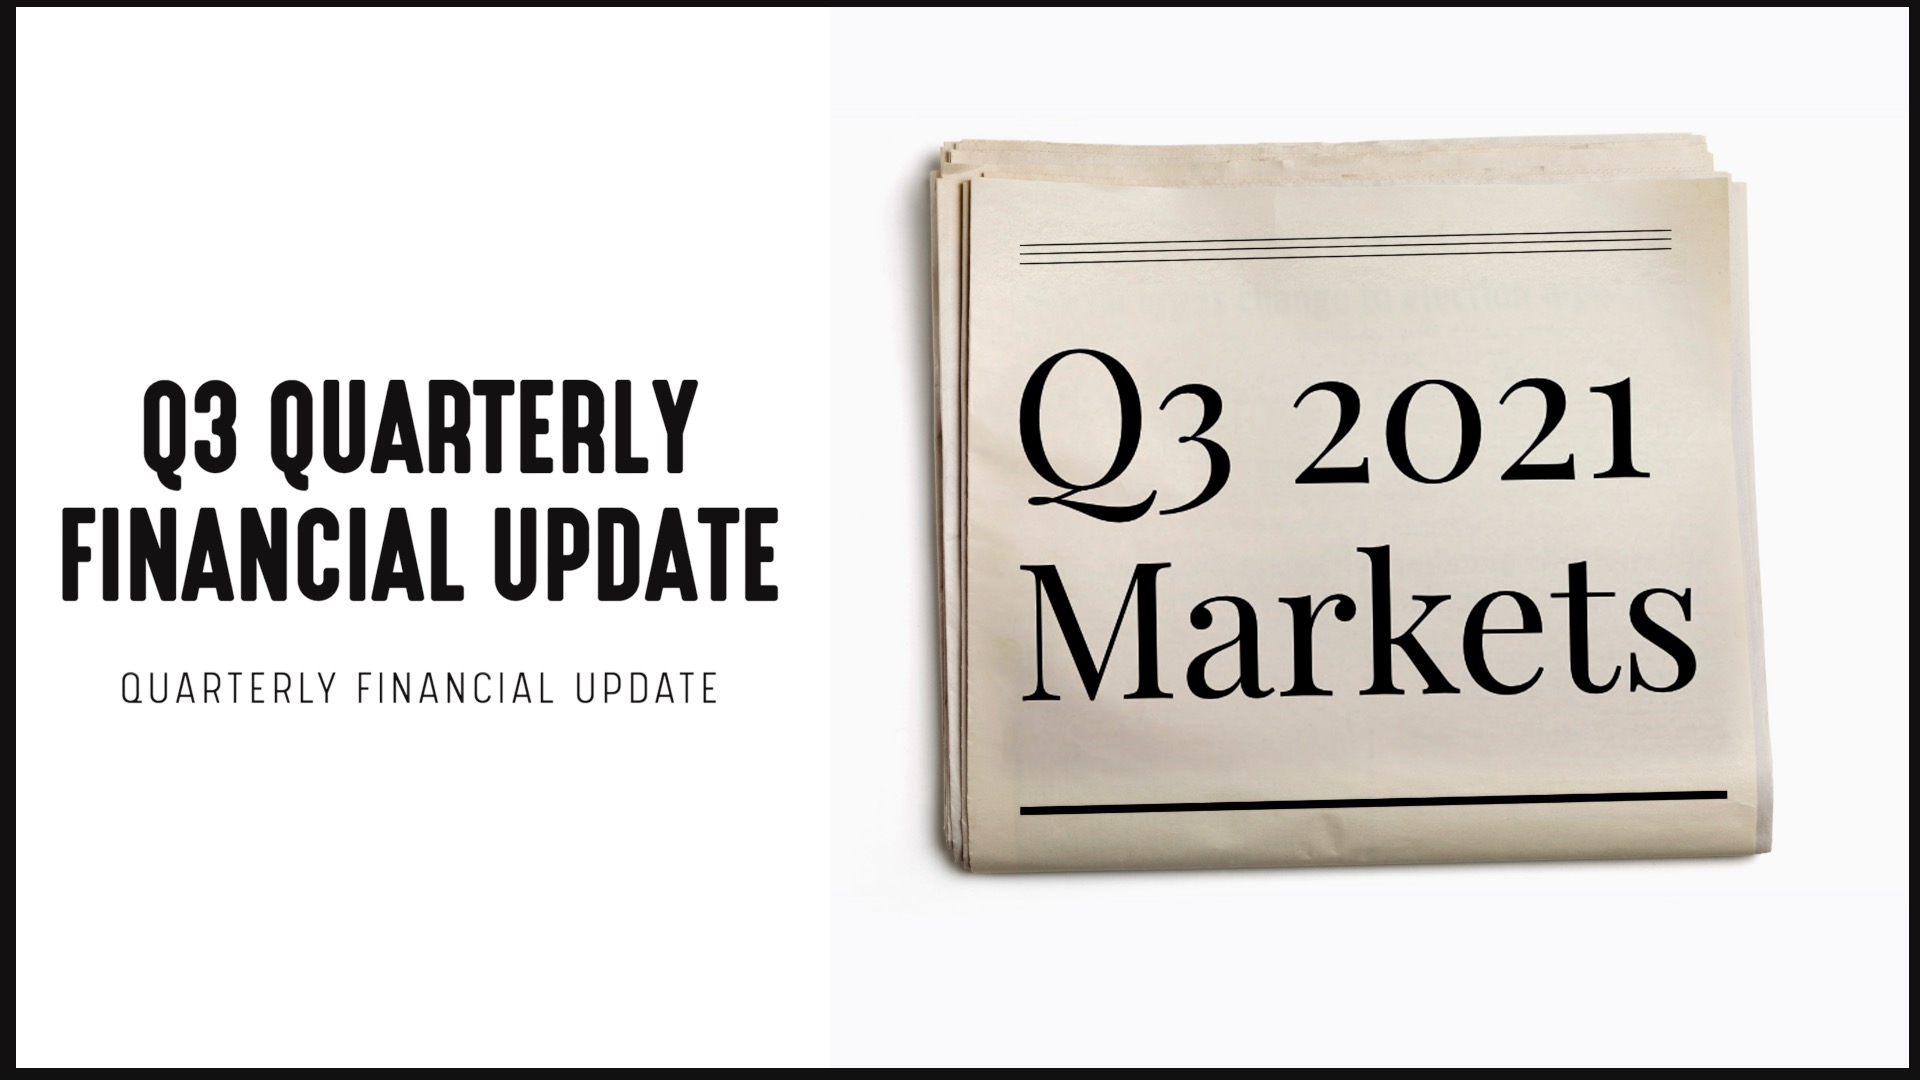 [NEW] Market Update Campaign | Q3 2021 Financial Update